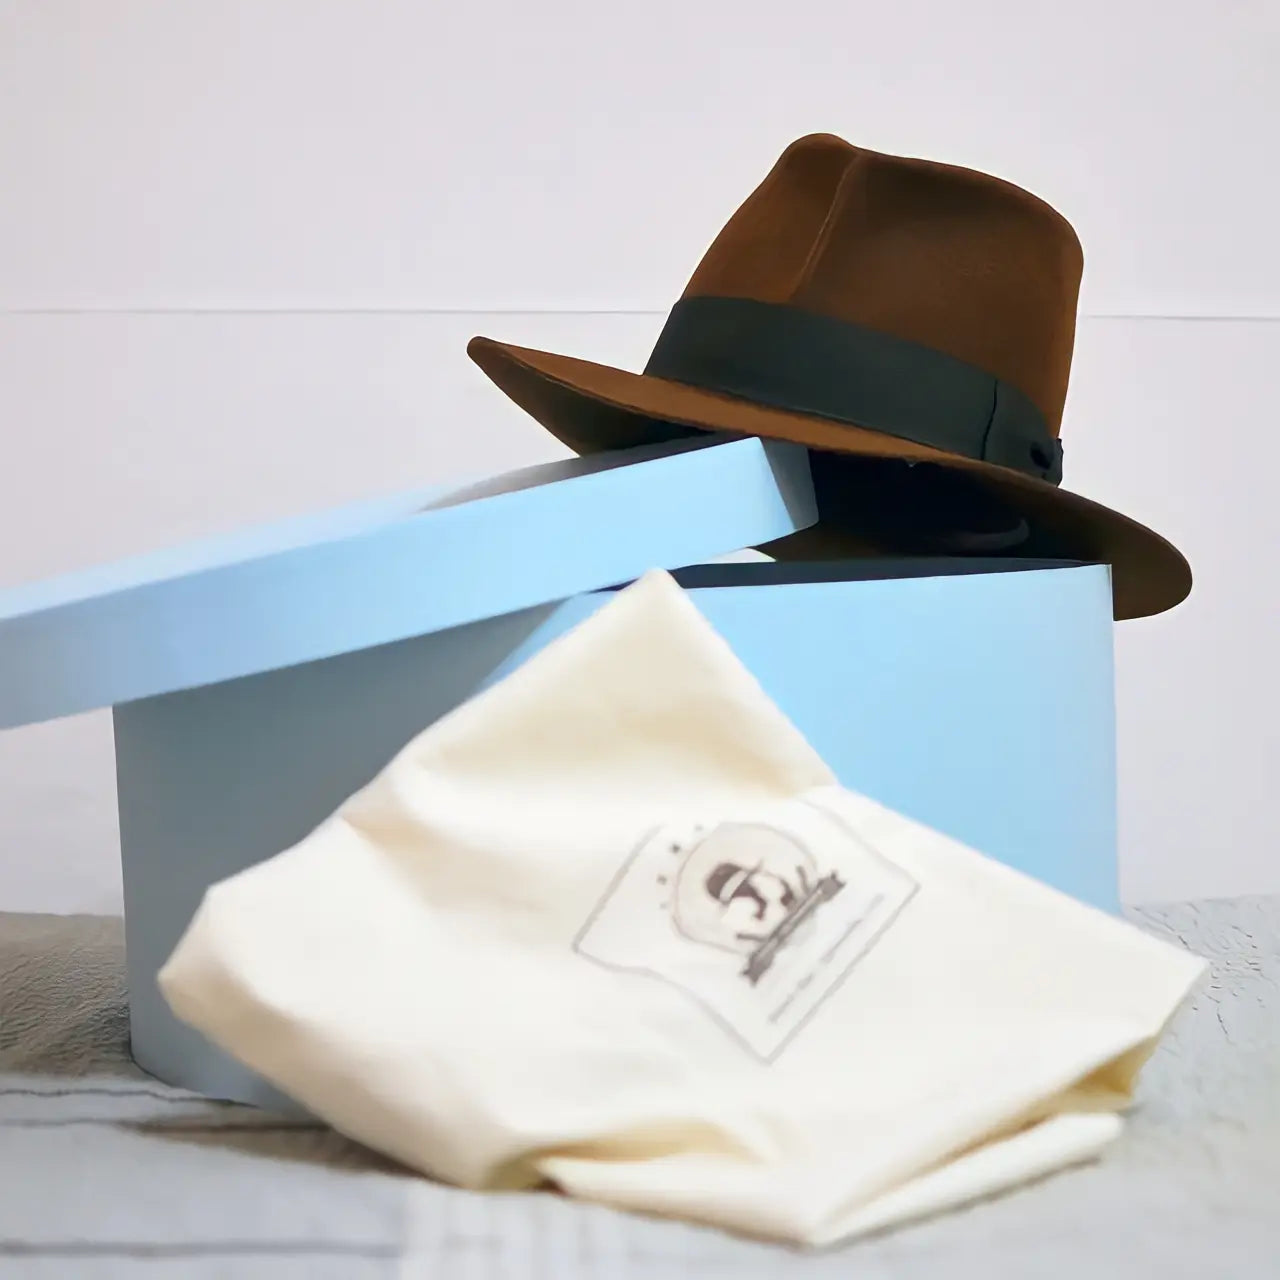 Agnoulita Hats' hatbox and organic cotton protective bag for safe and stylish storage.